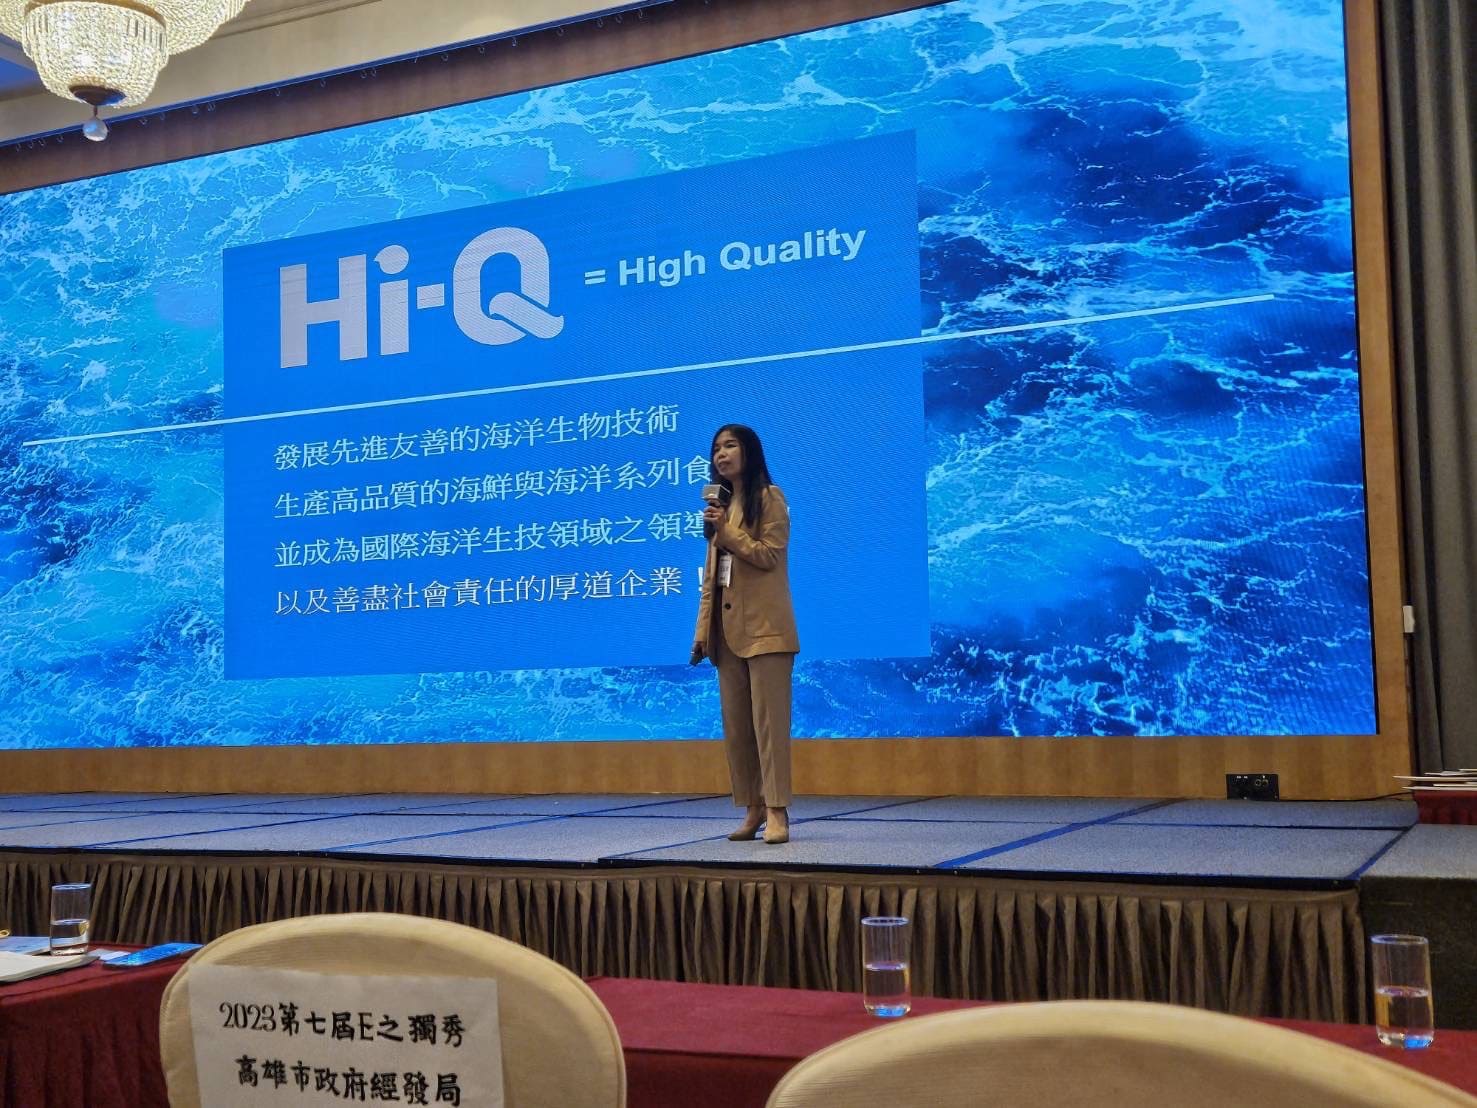 Hi-Q's Presence at the "E Spotlight: Entrepreneurial Showcase" Event in Kaohsiung